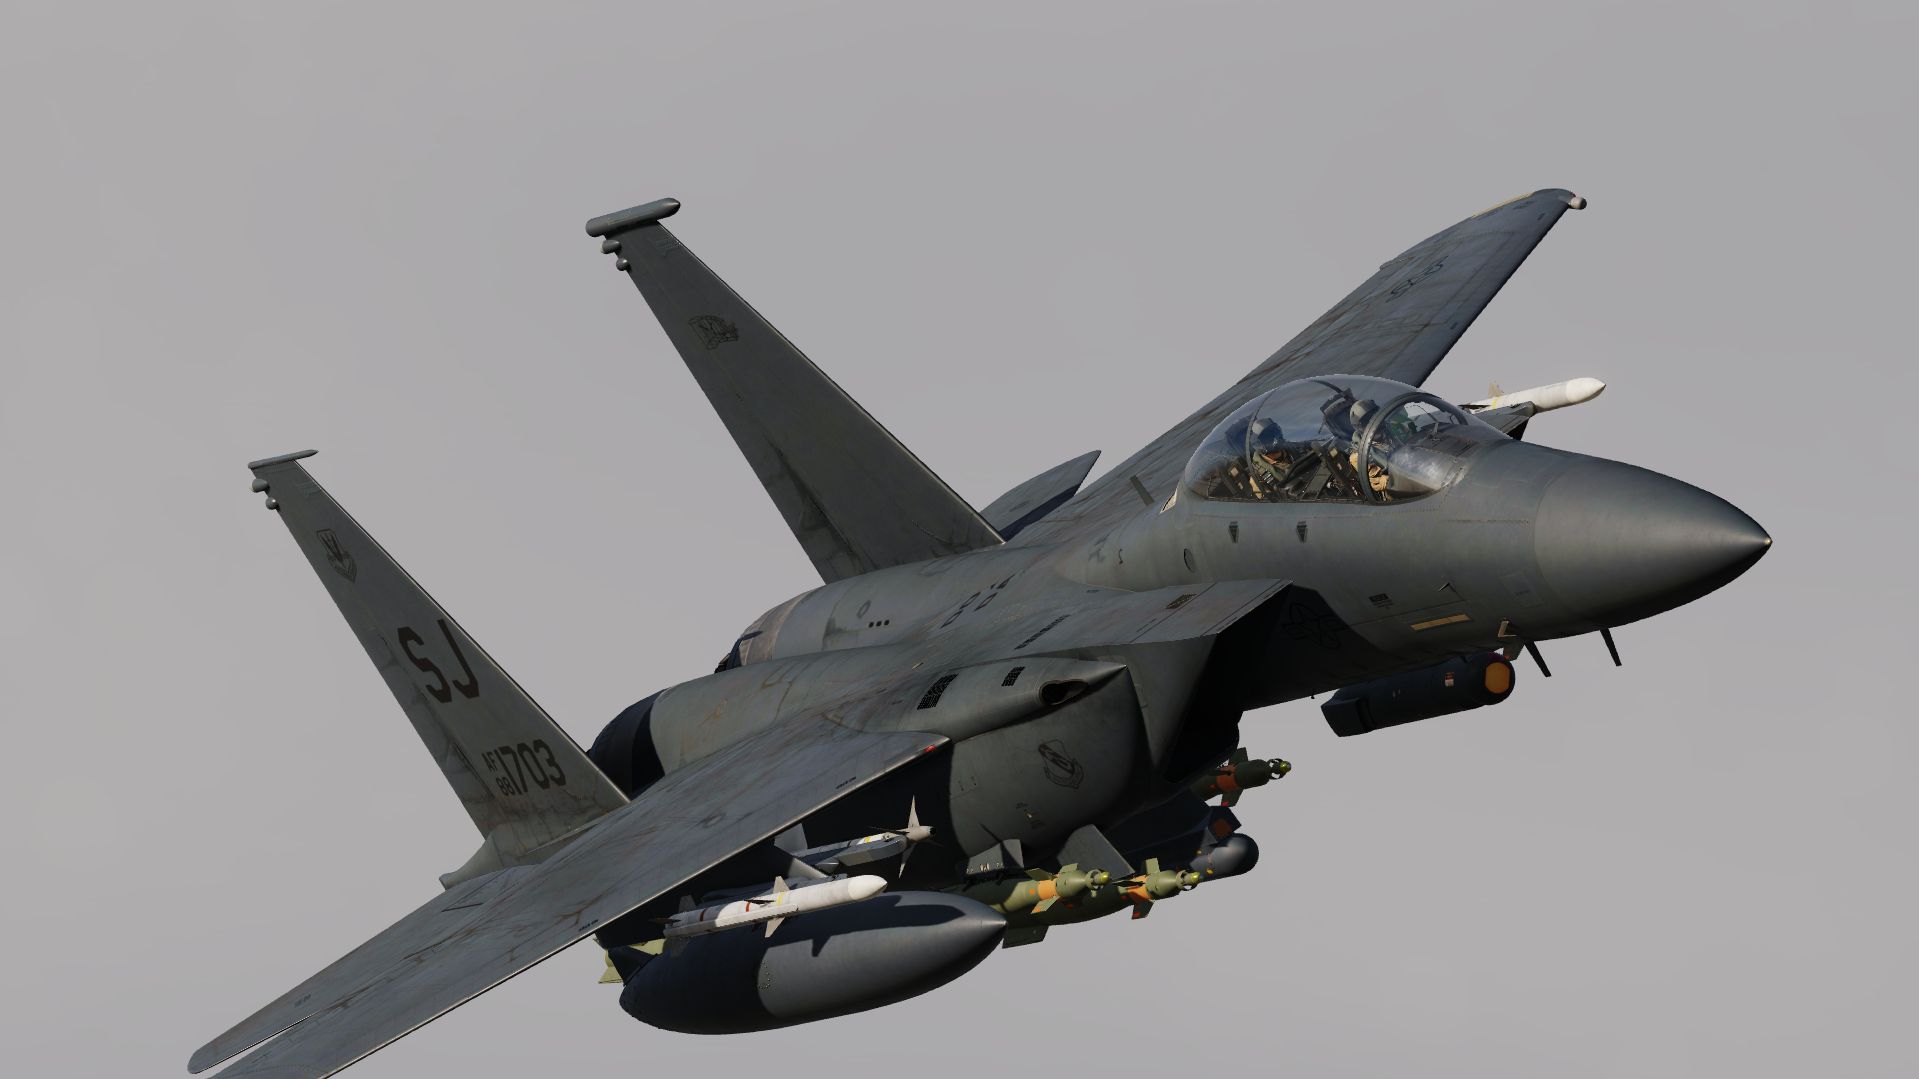 F-15E Strike eagle SJ 88-1703 "Intimidator"